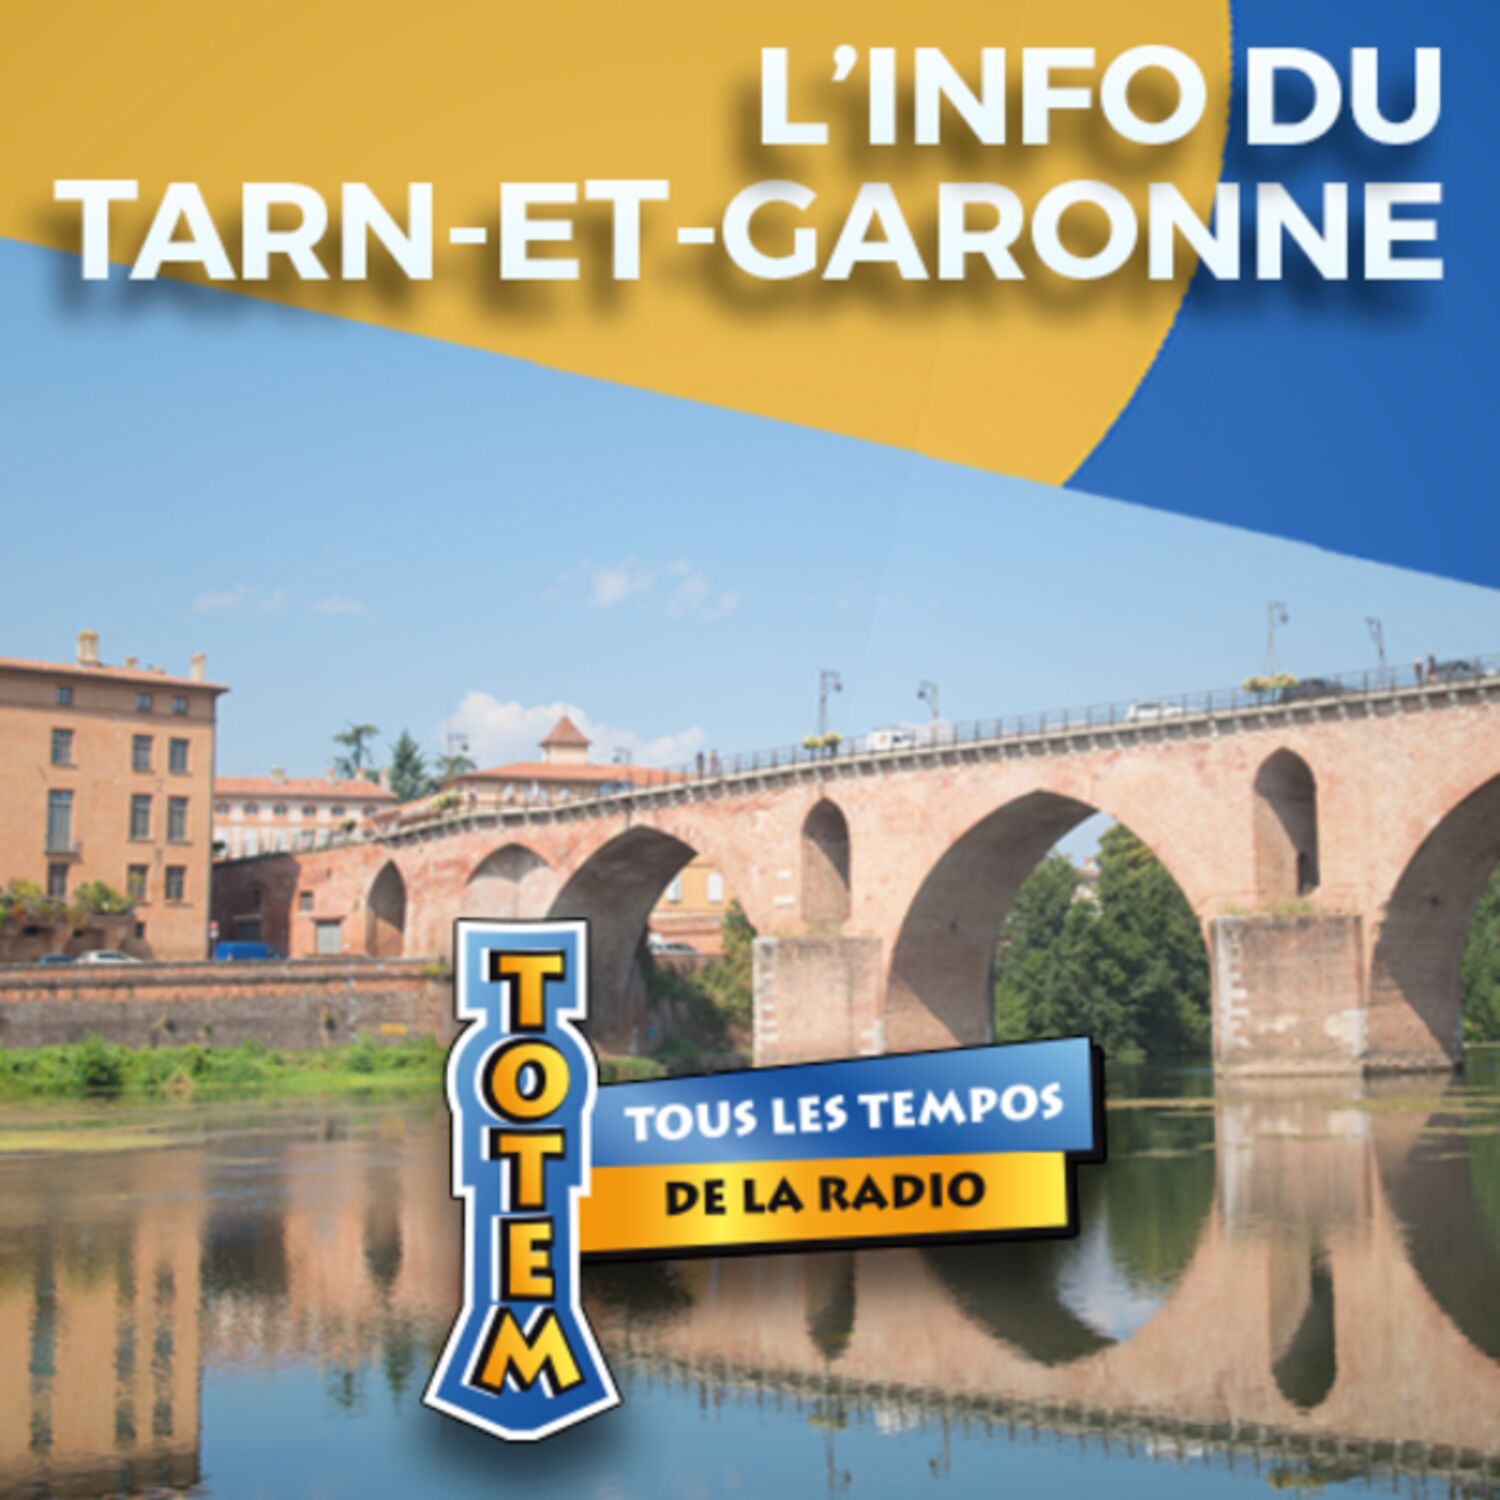 L'info du Tarn-et-Garonne du 11/04/23 à 07h29